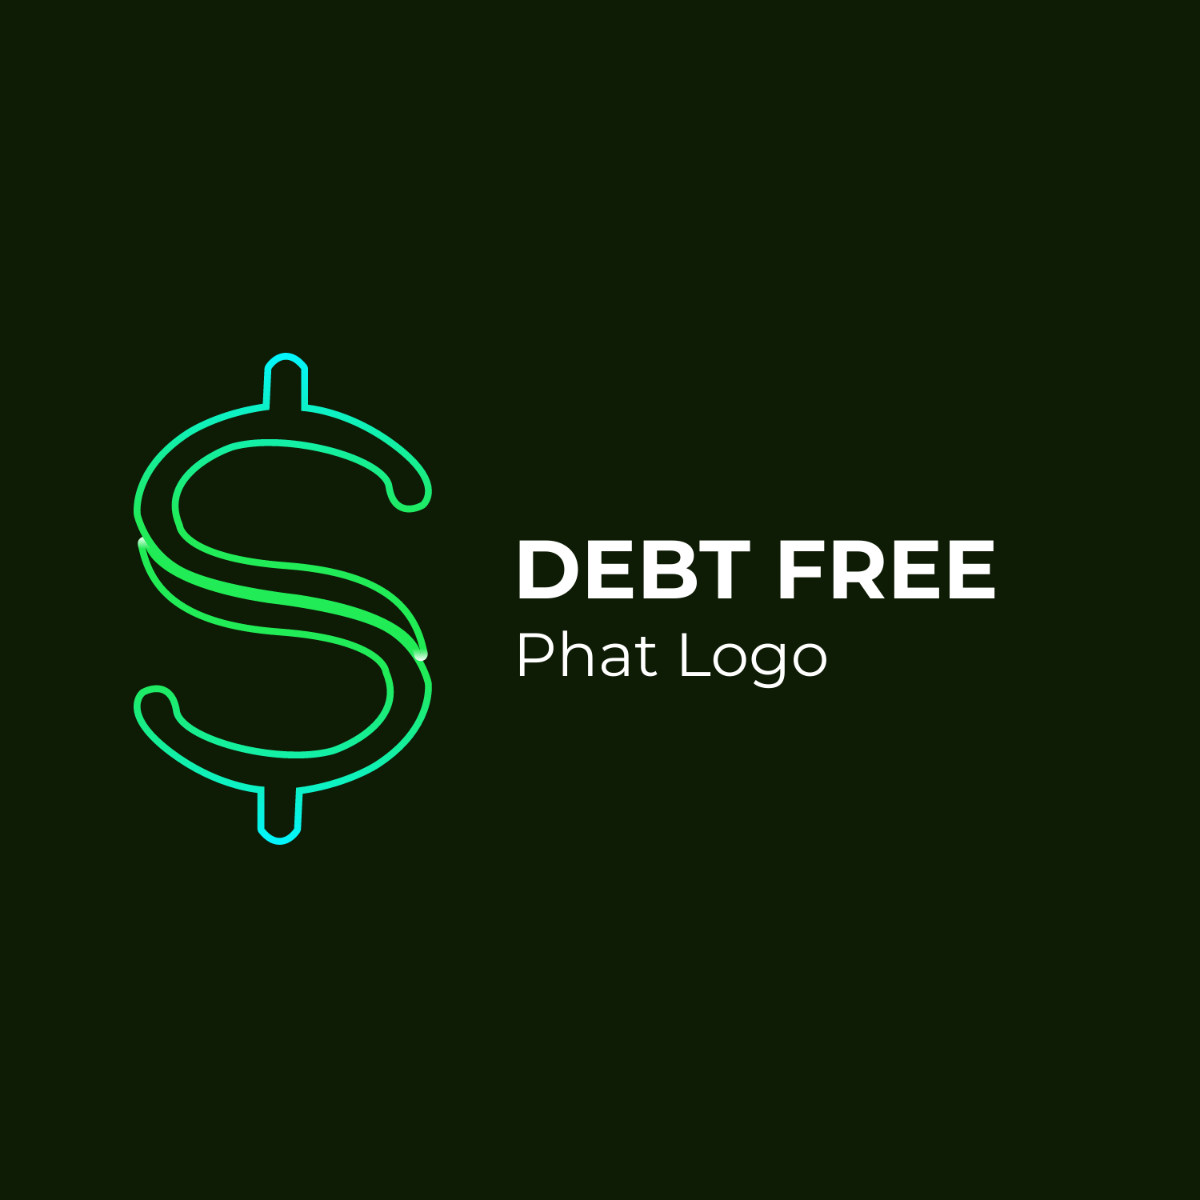 Debt-Free Path Logo Template